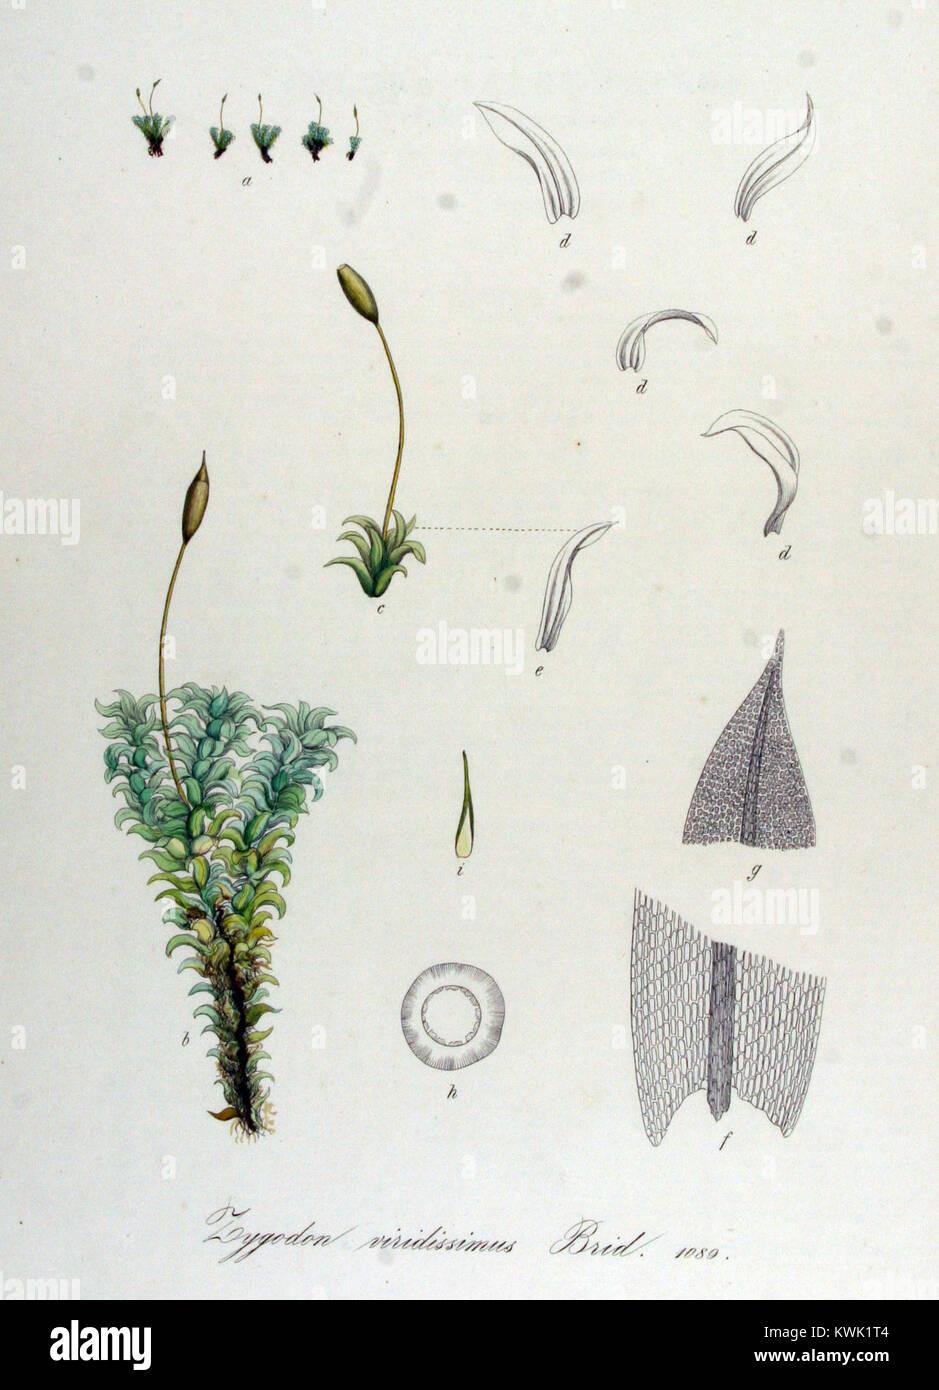 zygodon-viridissimus-flora-batava-volume-v14-KWK1T4.jpg